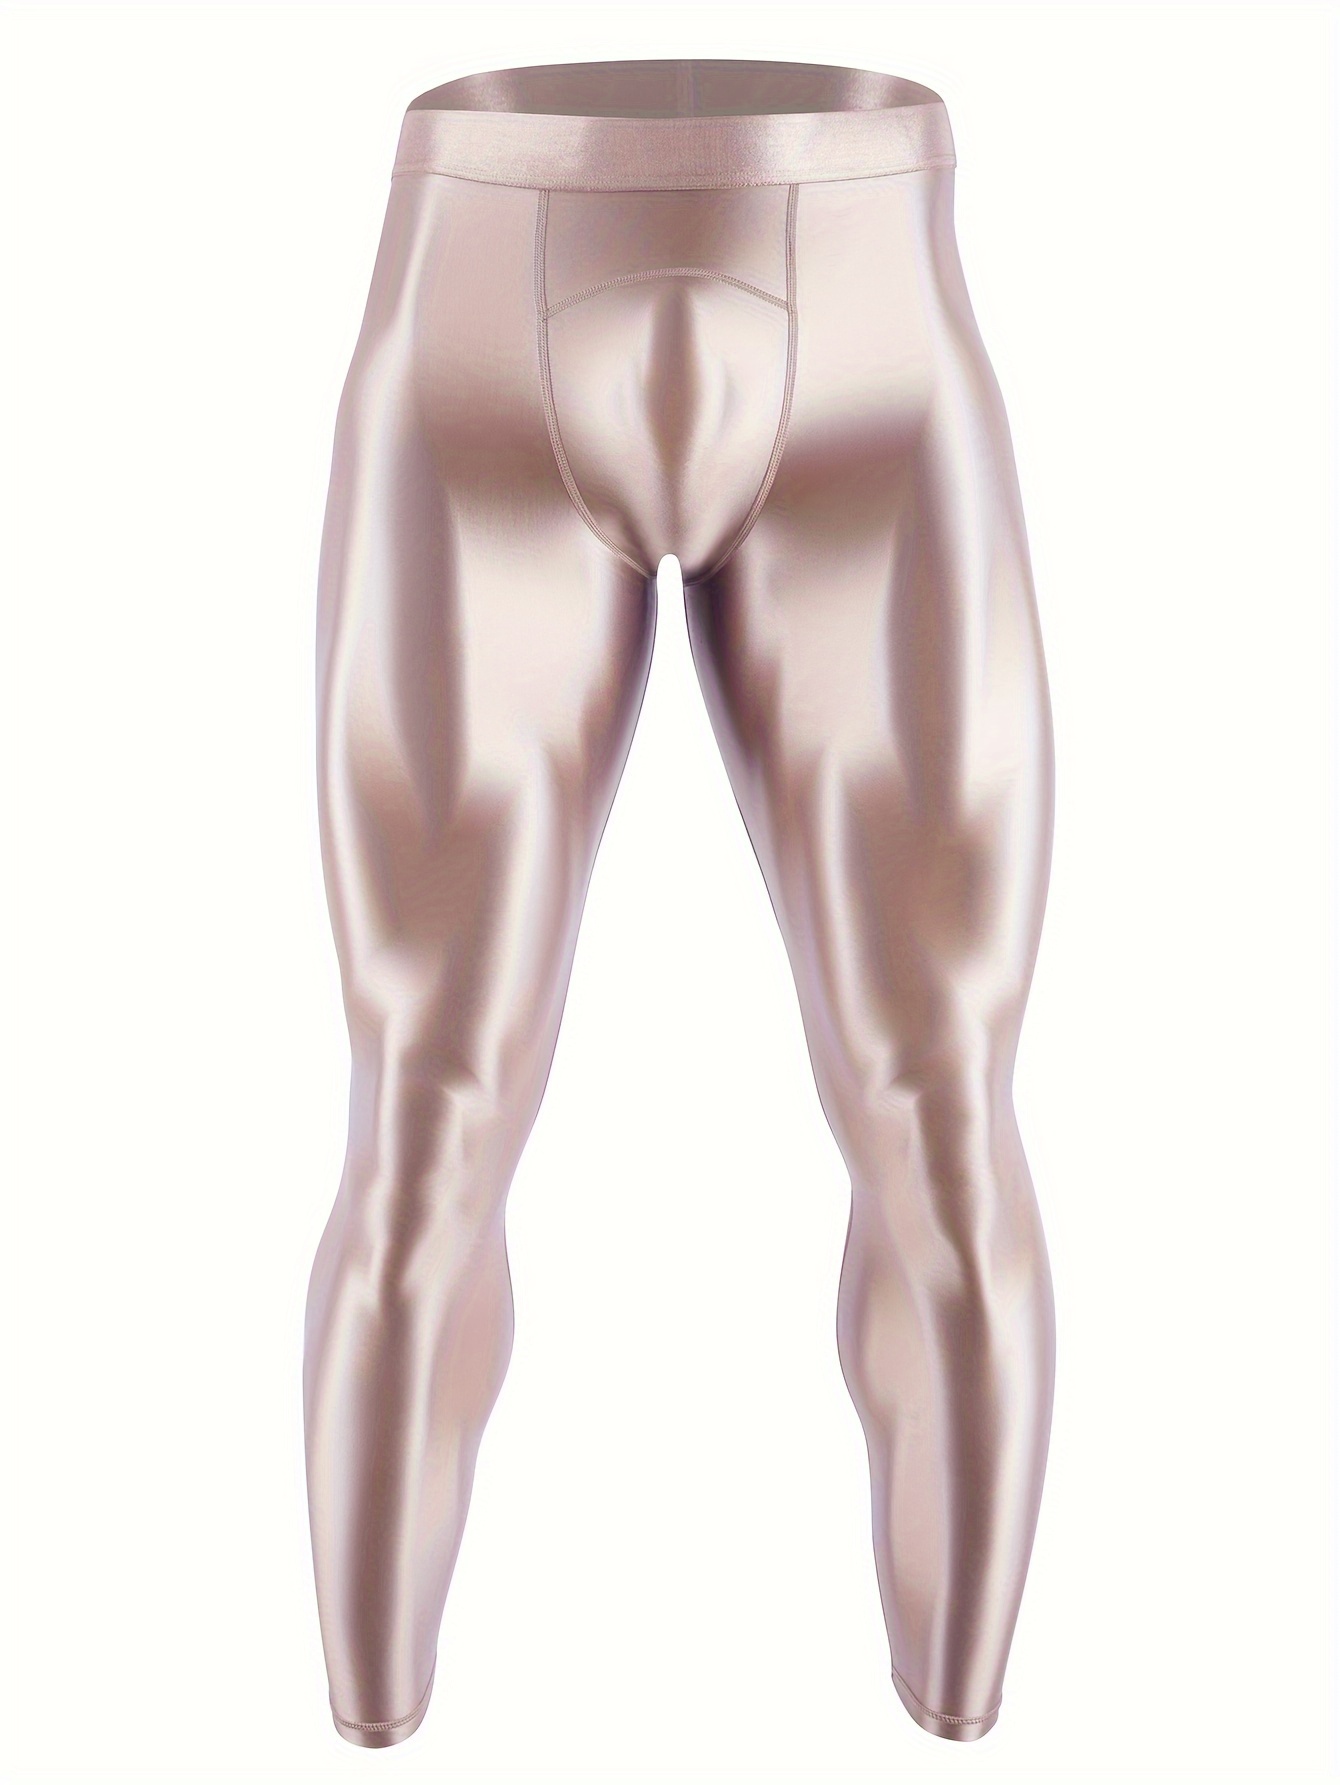 Mens Thin Oil Shiny Glossy Leggings See Through Underwear Sexy